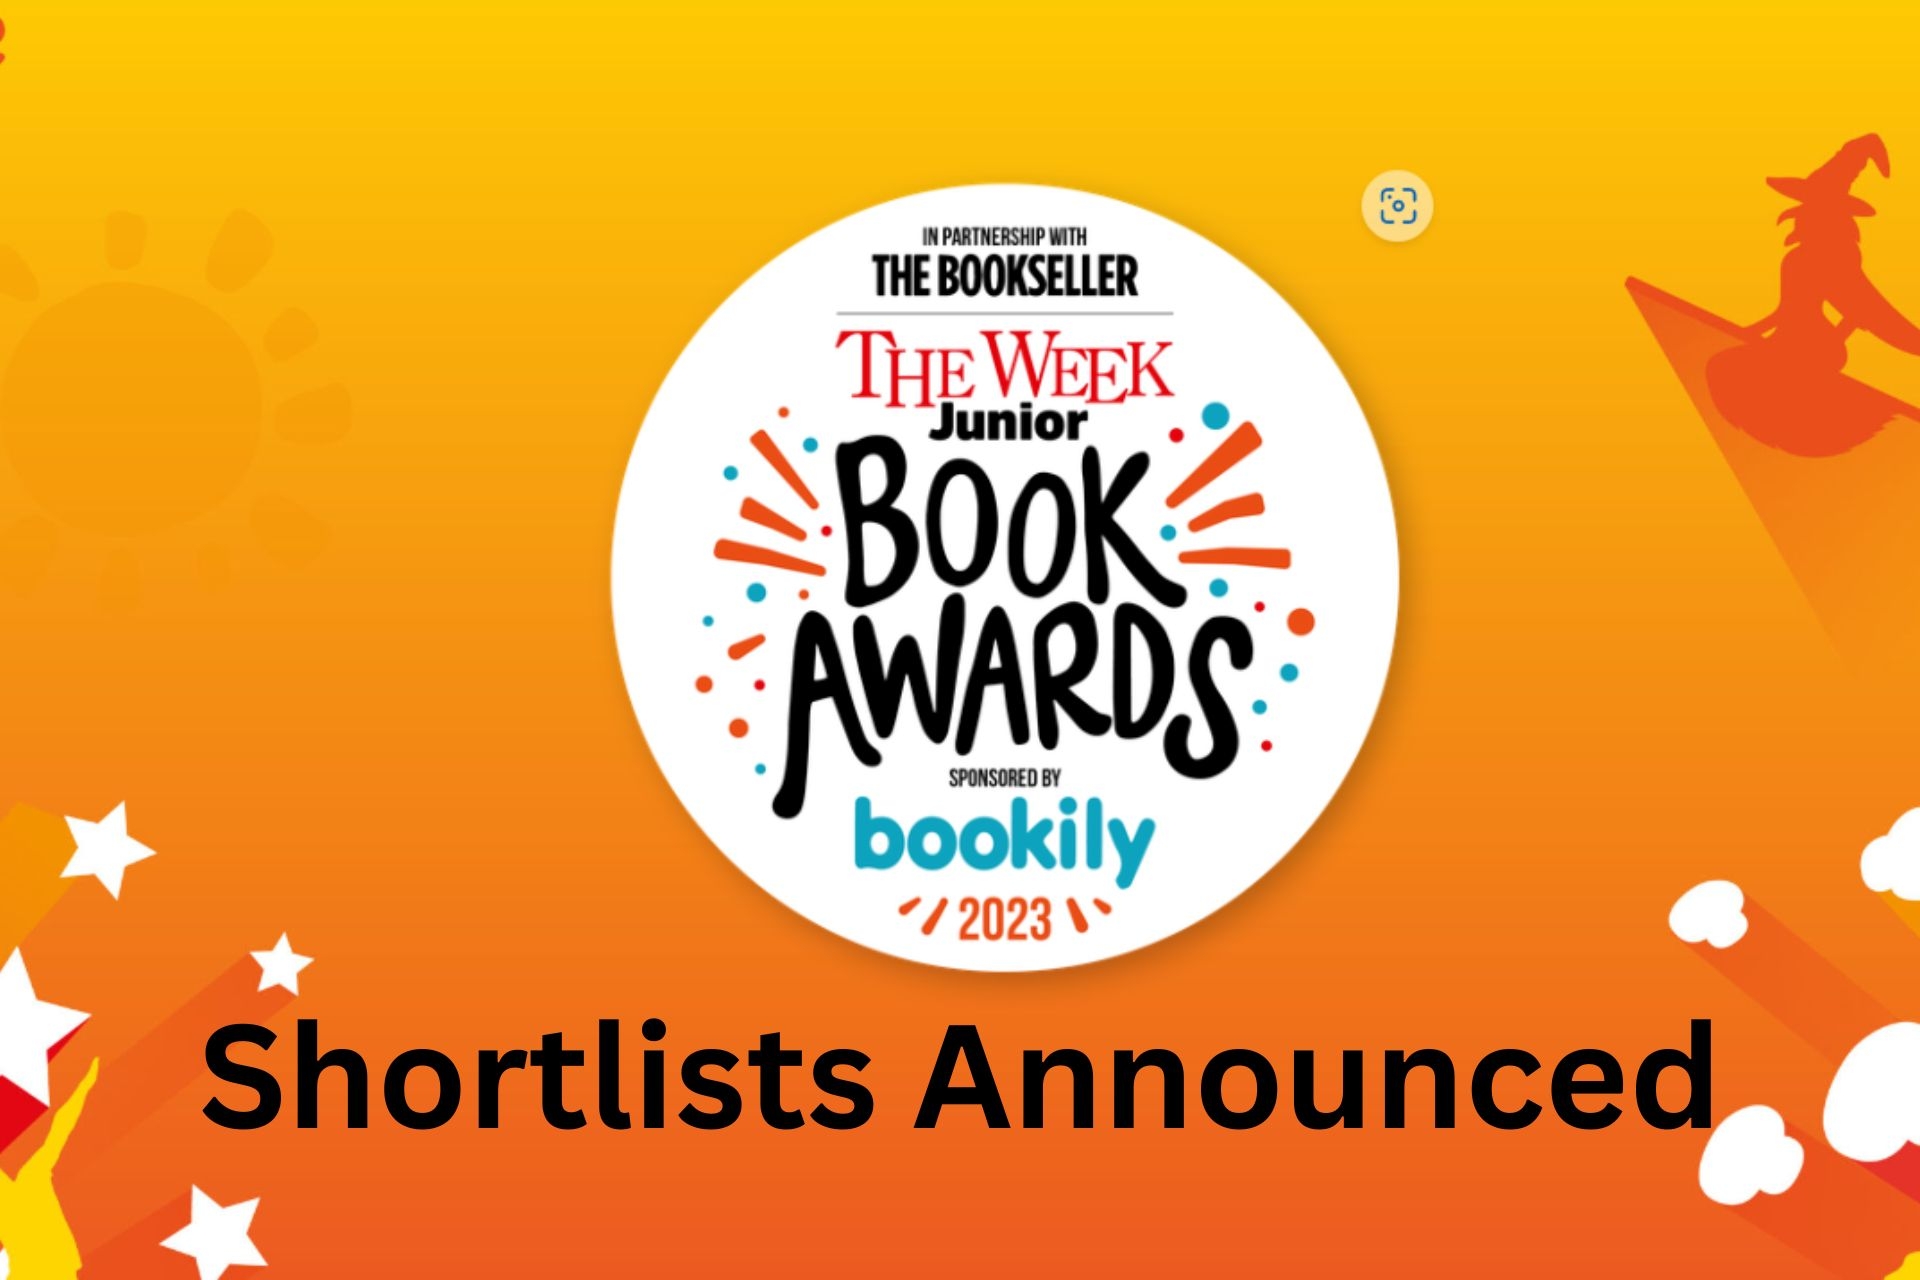 The Week Junior Book Awards Announces Shortlist